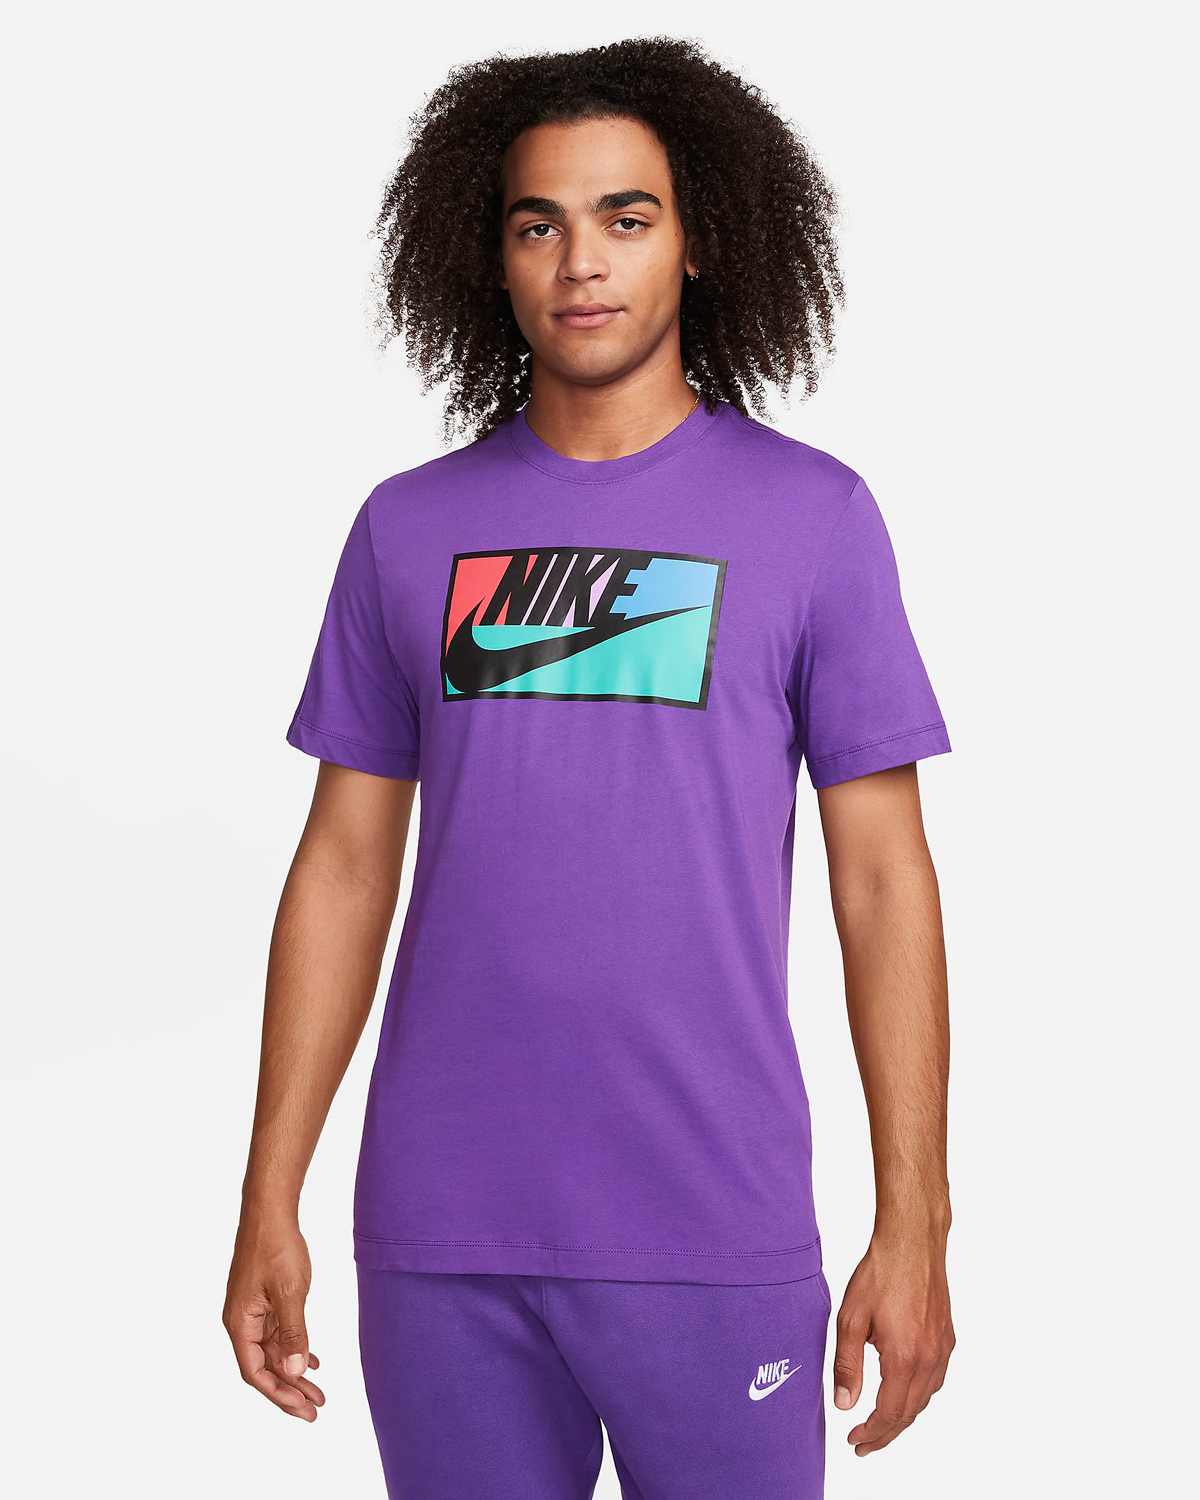 Nike-Sportswear-Patch-T-Shirt-Purple-Cosmos